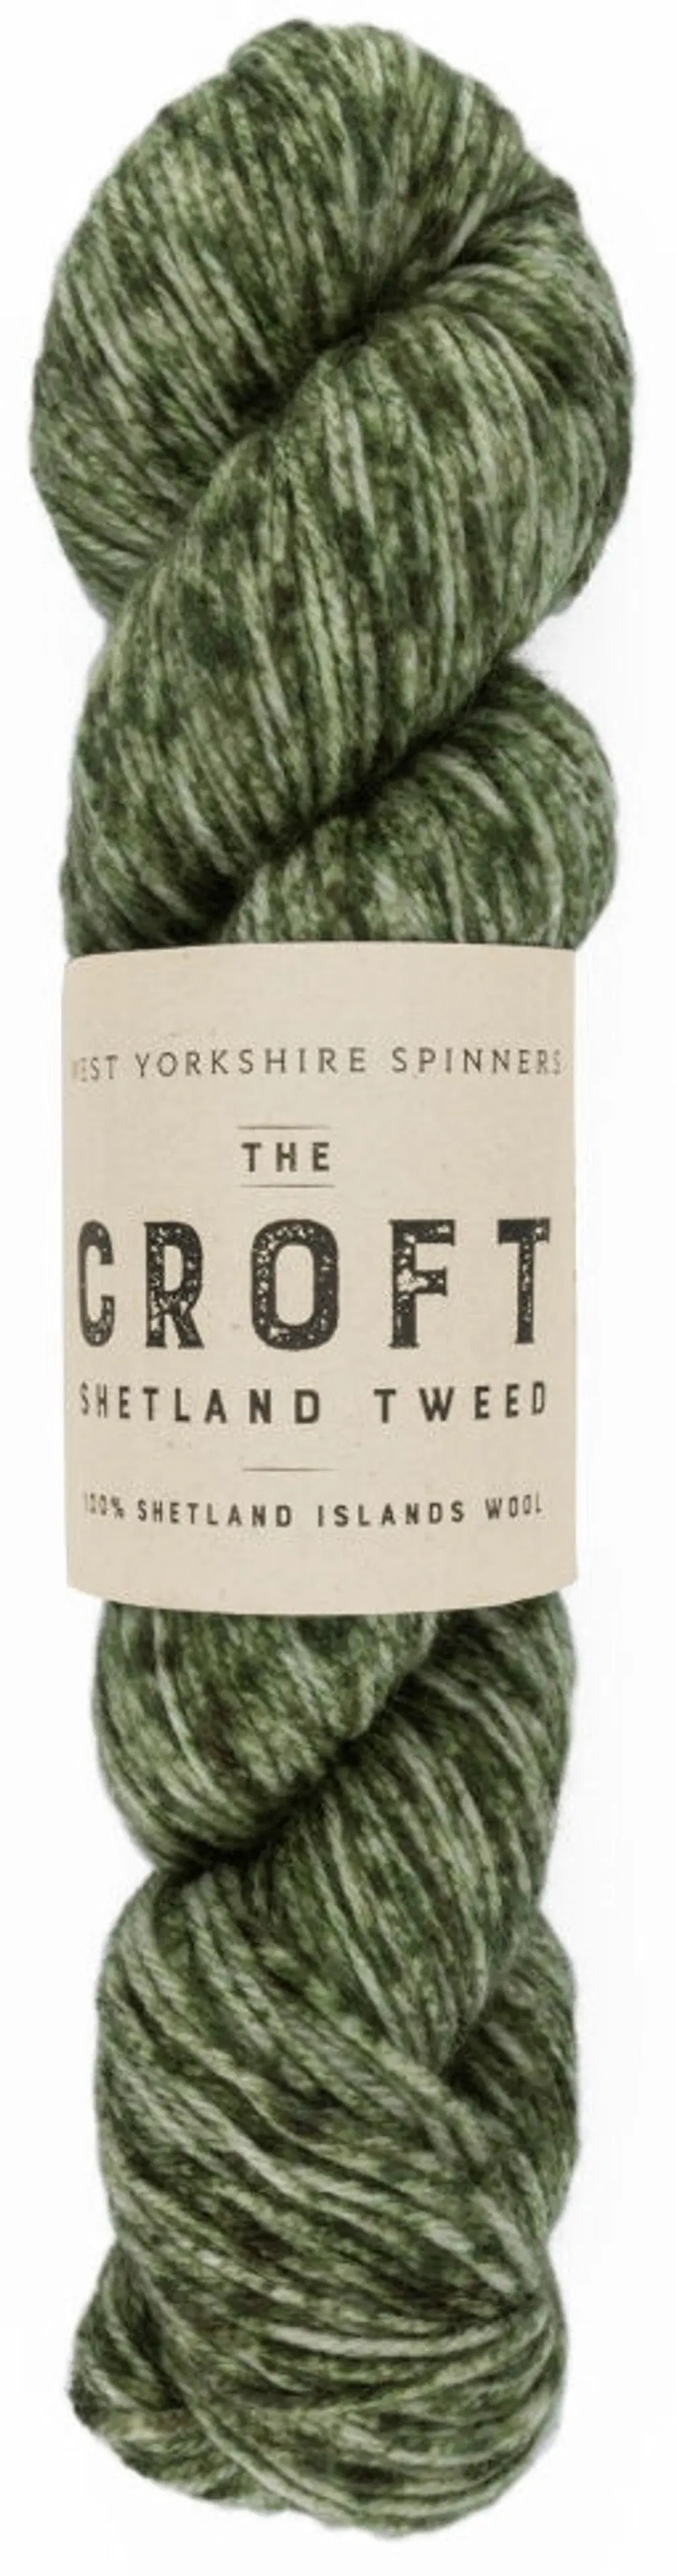 West Yorkshire Spinners lanka The Croft Shetland Tweed DK 100g Hillside 809